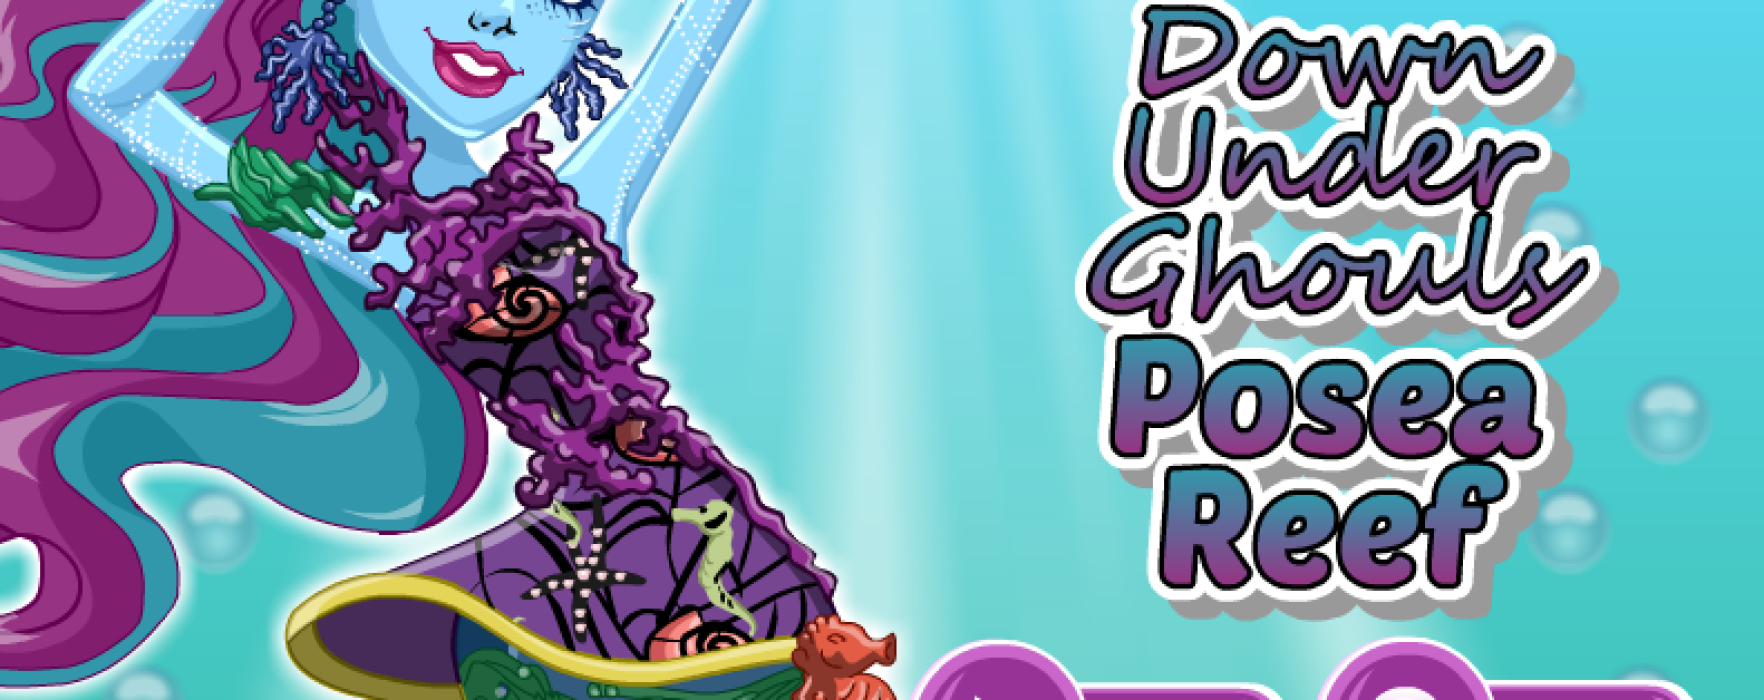 Одевалка Поси Риф (Posea Reef) из мультфильма»Great Scarrier Reef» — игры Monster High